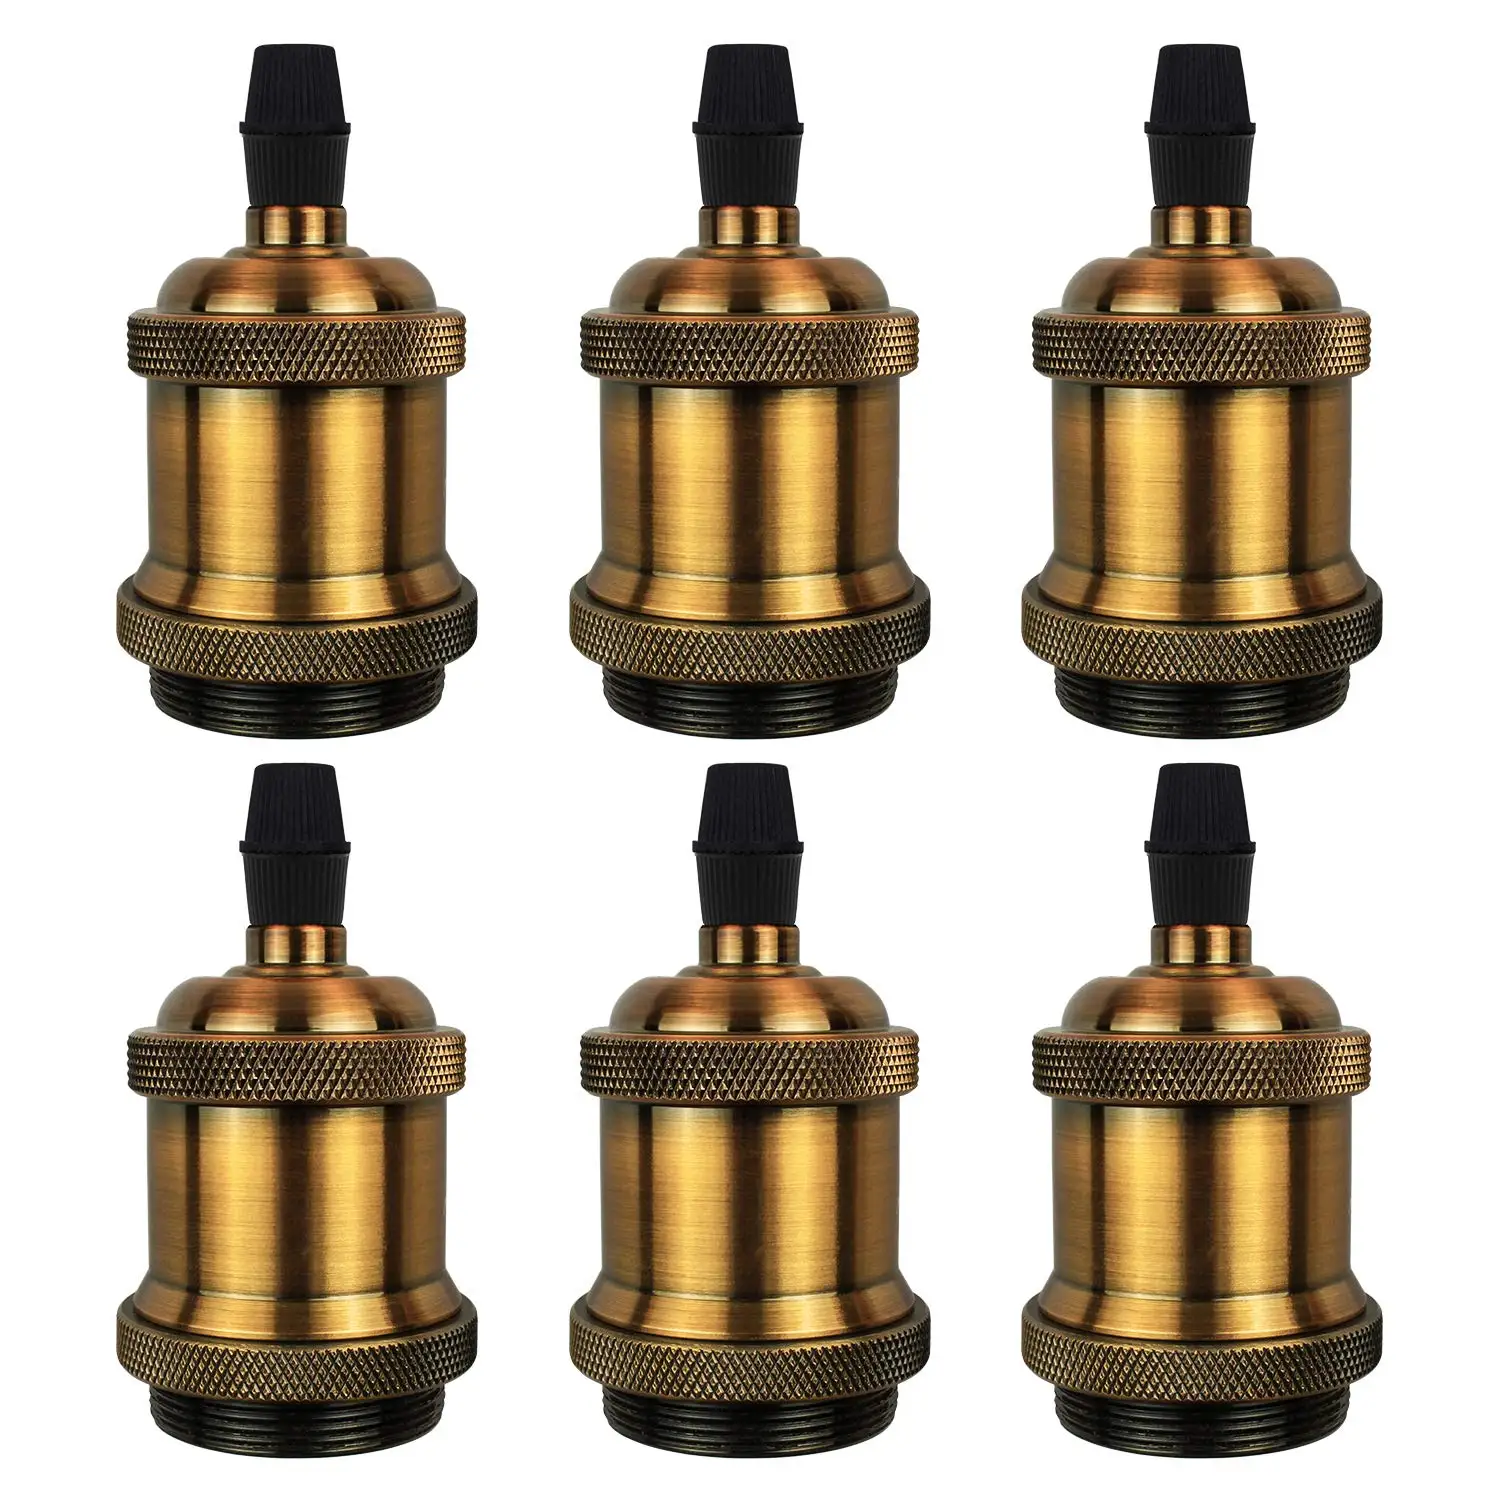 
Vintage lamp socket E26 E27 base antique Edison pendant ceramics light sockets antique brass color industrial lamp holder 